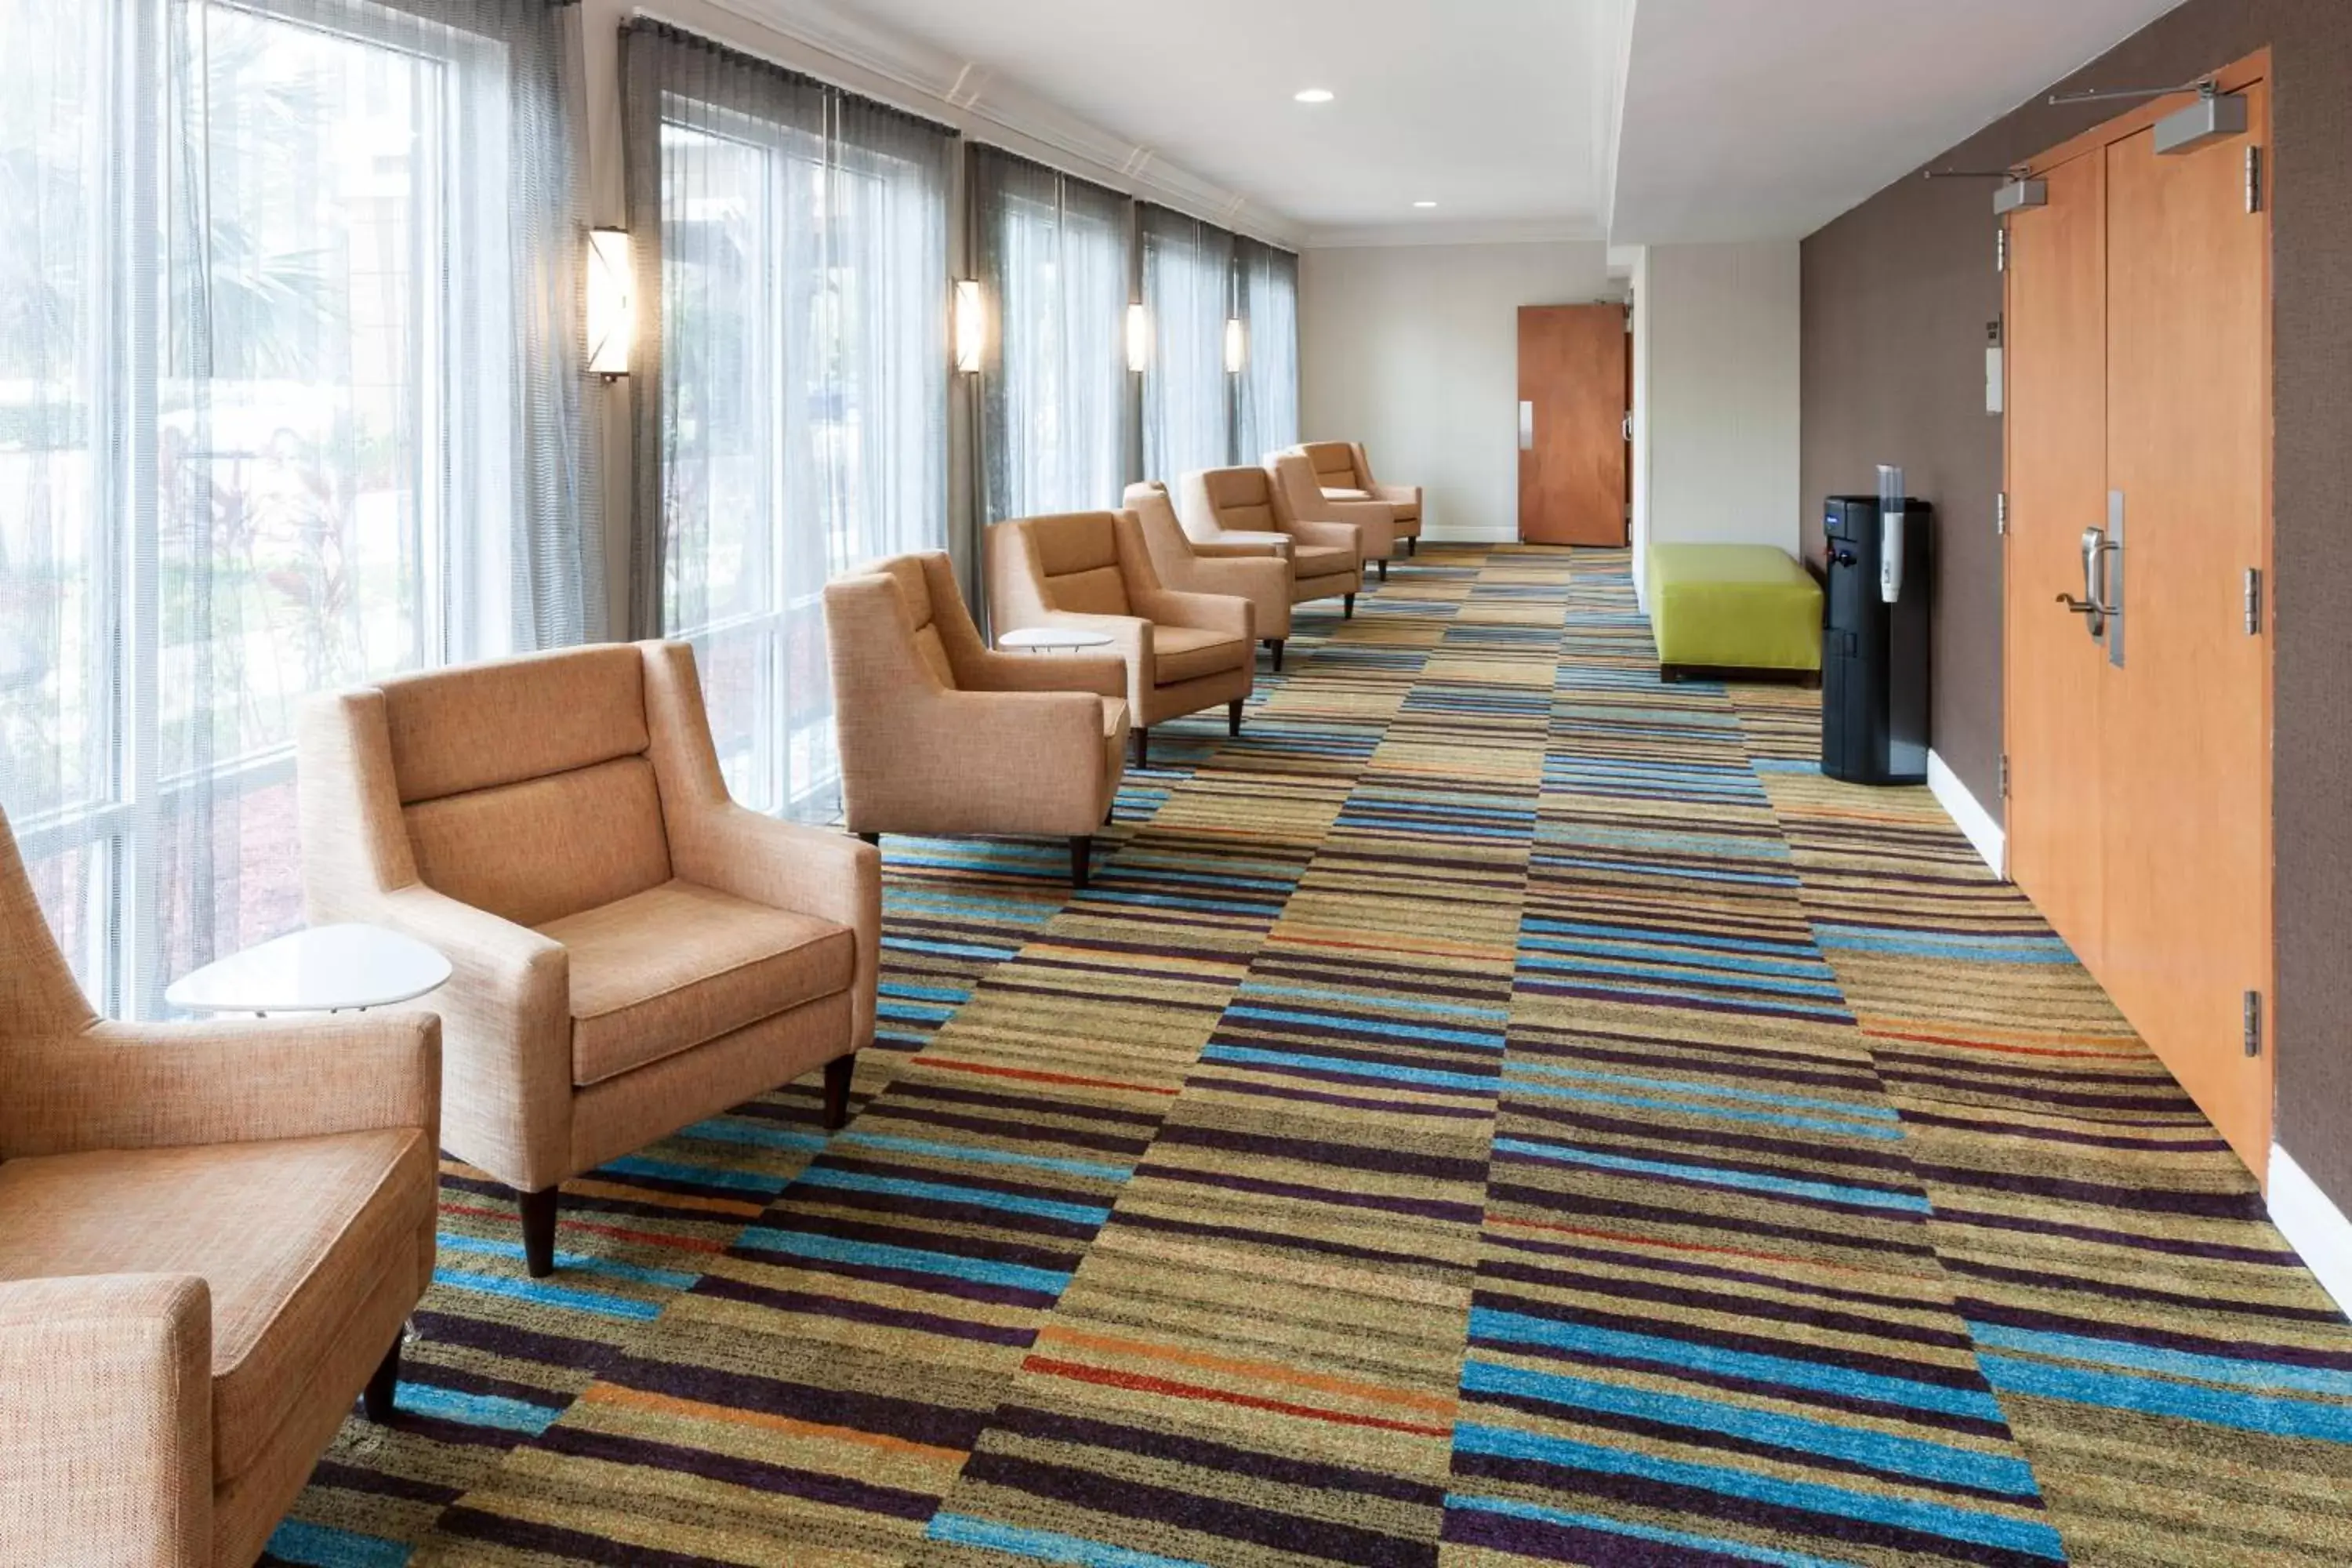 Meeting/conference room in Fairfield Inn & Suites Jacksonville Butler Boulevard